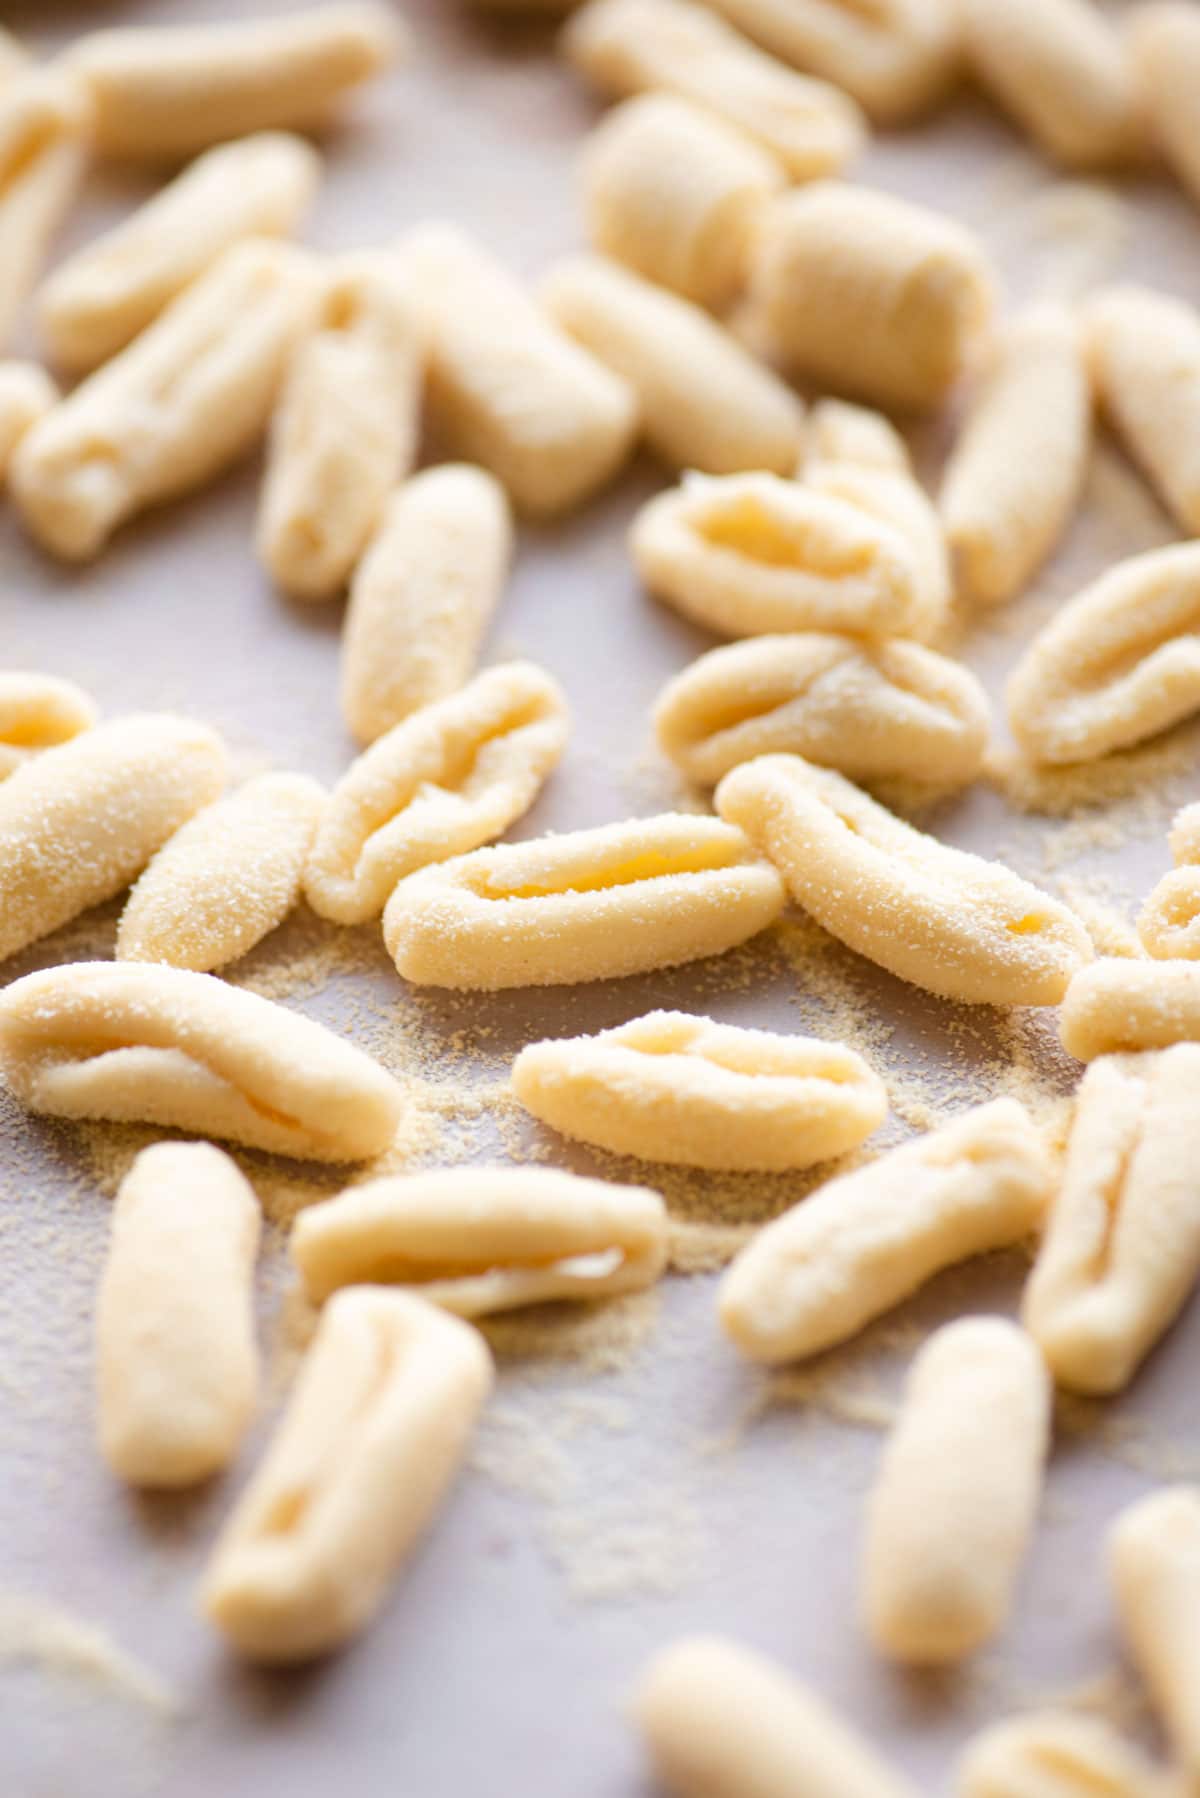 A close up of semolina pasta dough made into shapes